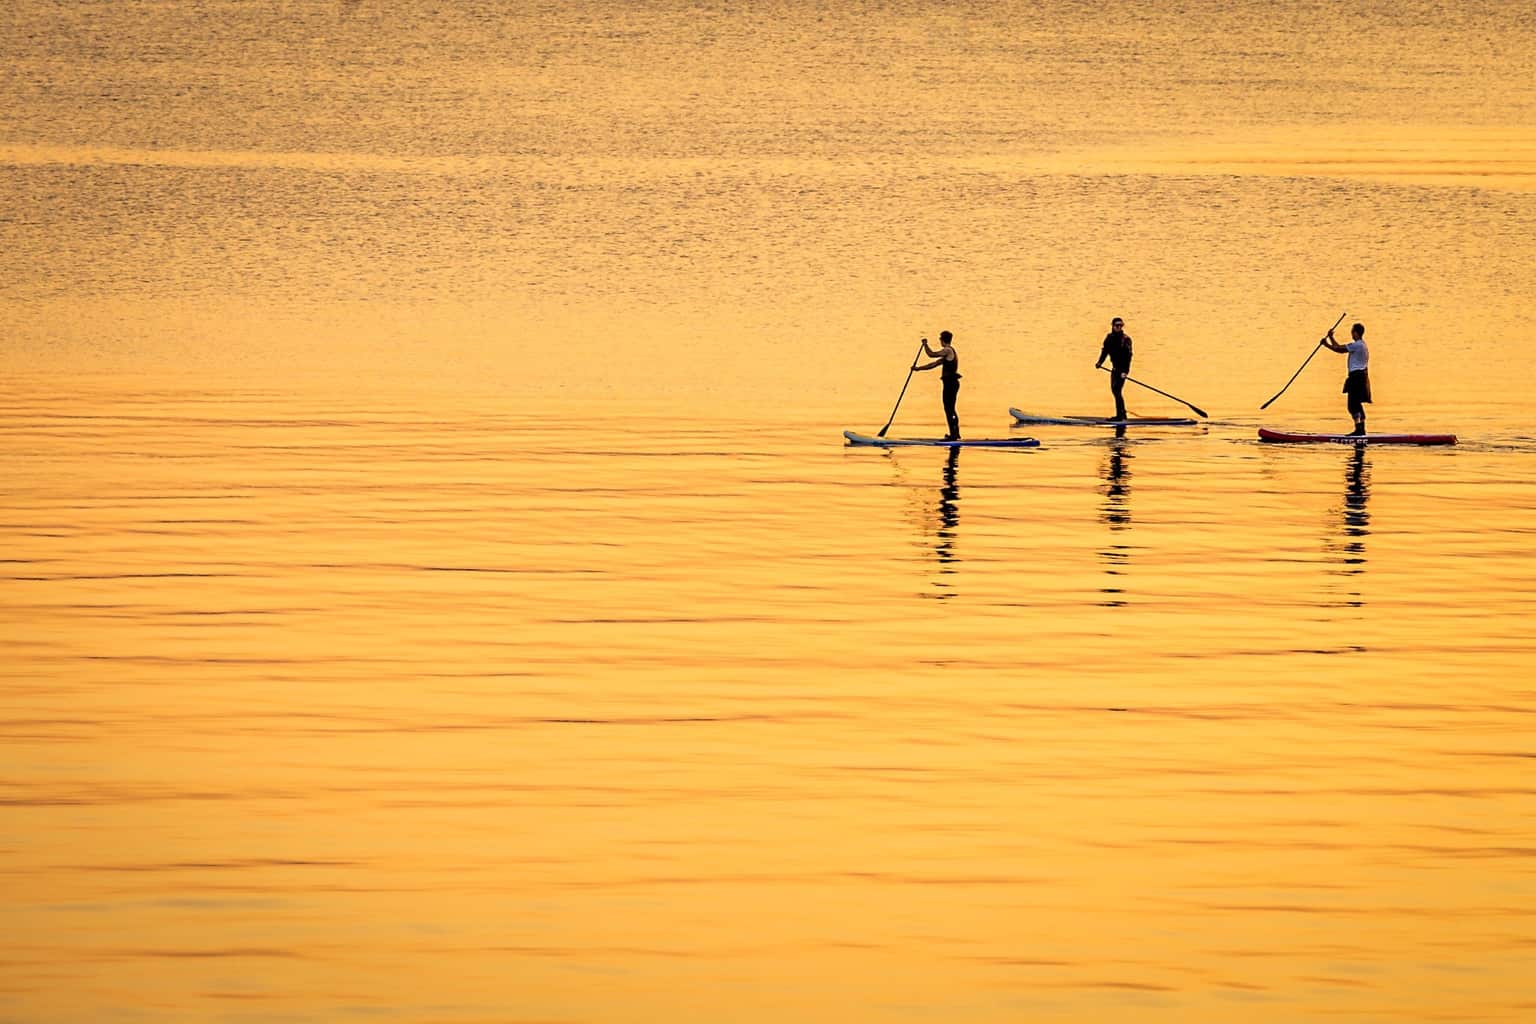  Paddle boarders at sunset, Sandbanks, Poole 